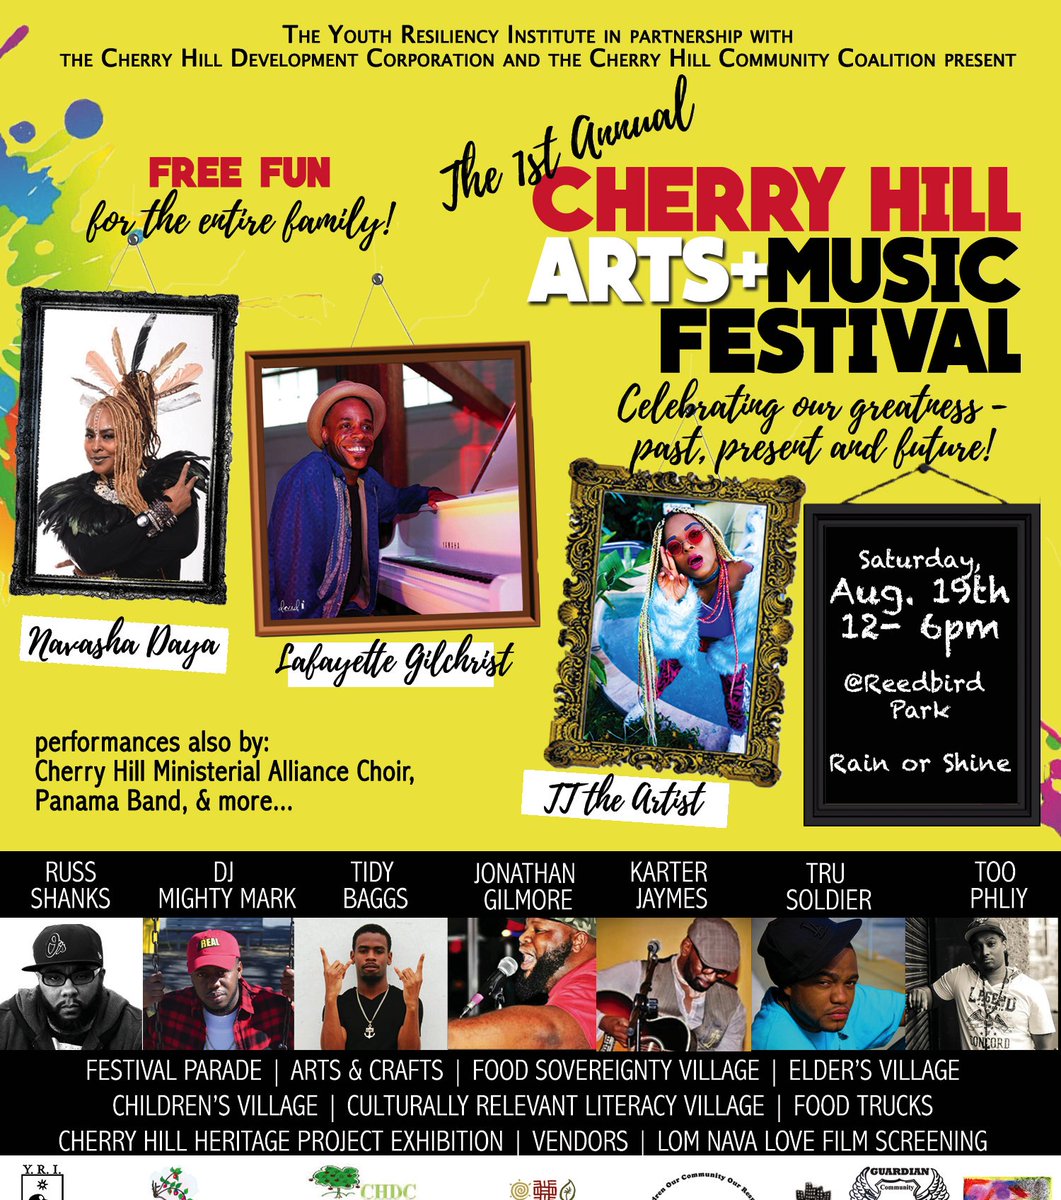 A celebration of arts & culture in Baltimore’s historic Cherry Hill community. CherryHillFest.com
#CommunitySelfDetermination